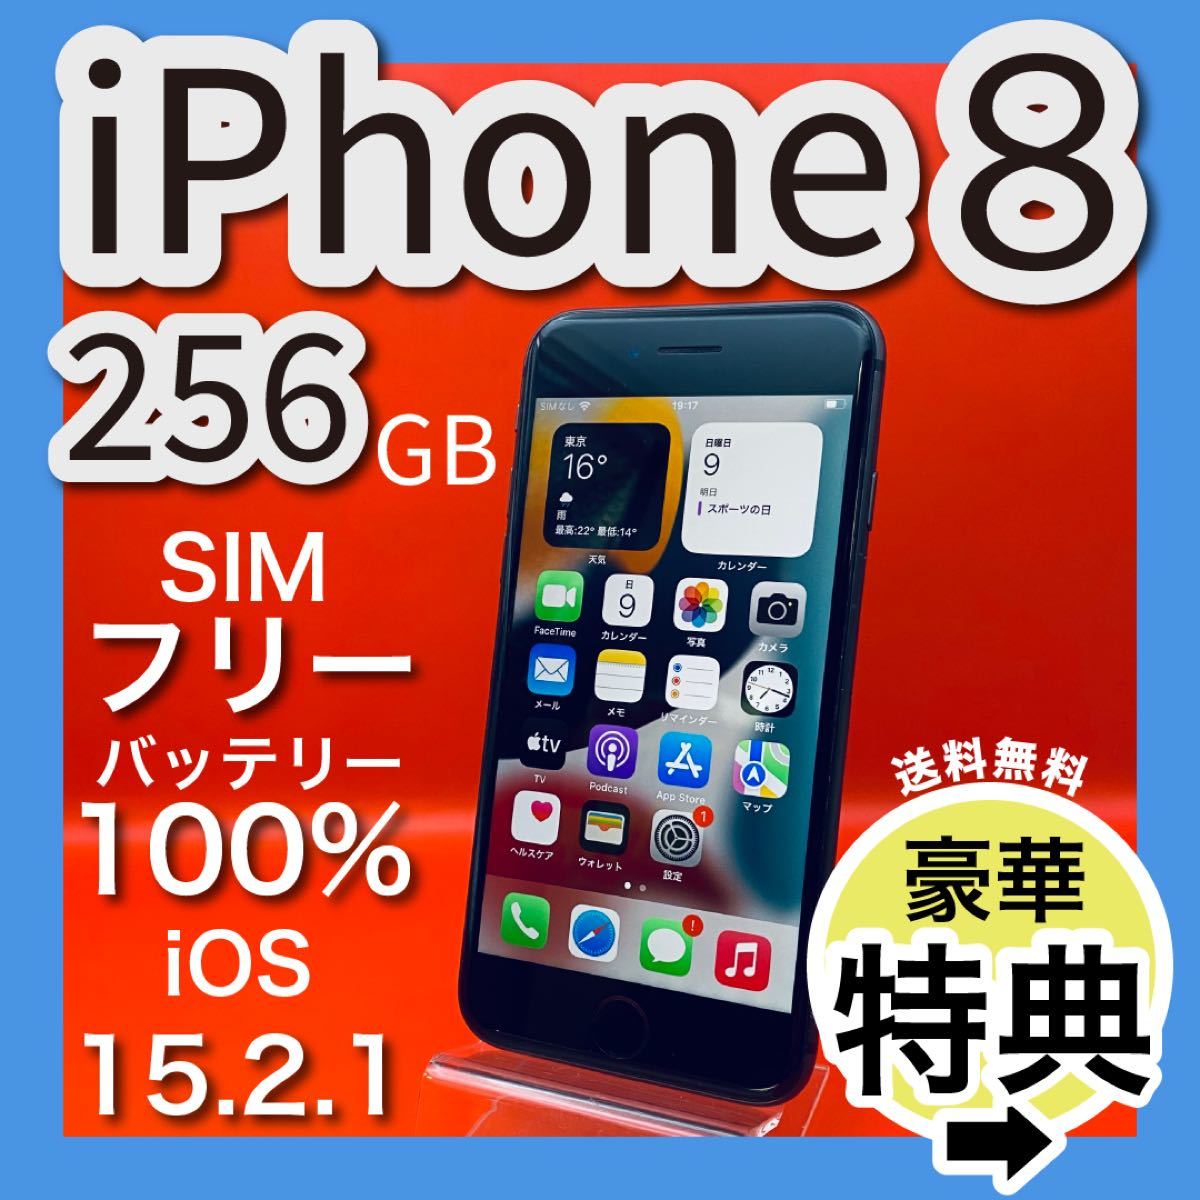 IPhone 8 Space Gray SIMフリー 256gb - library.iainponorogo.ac.id